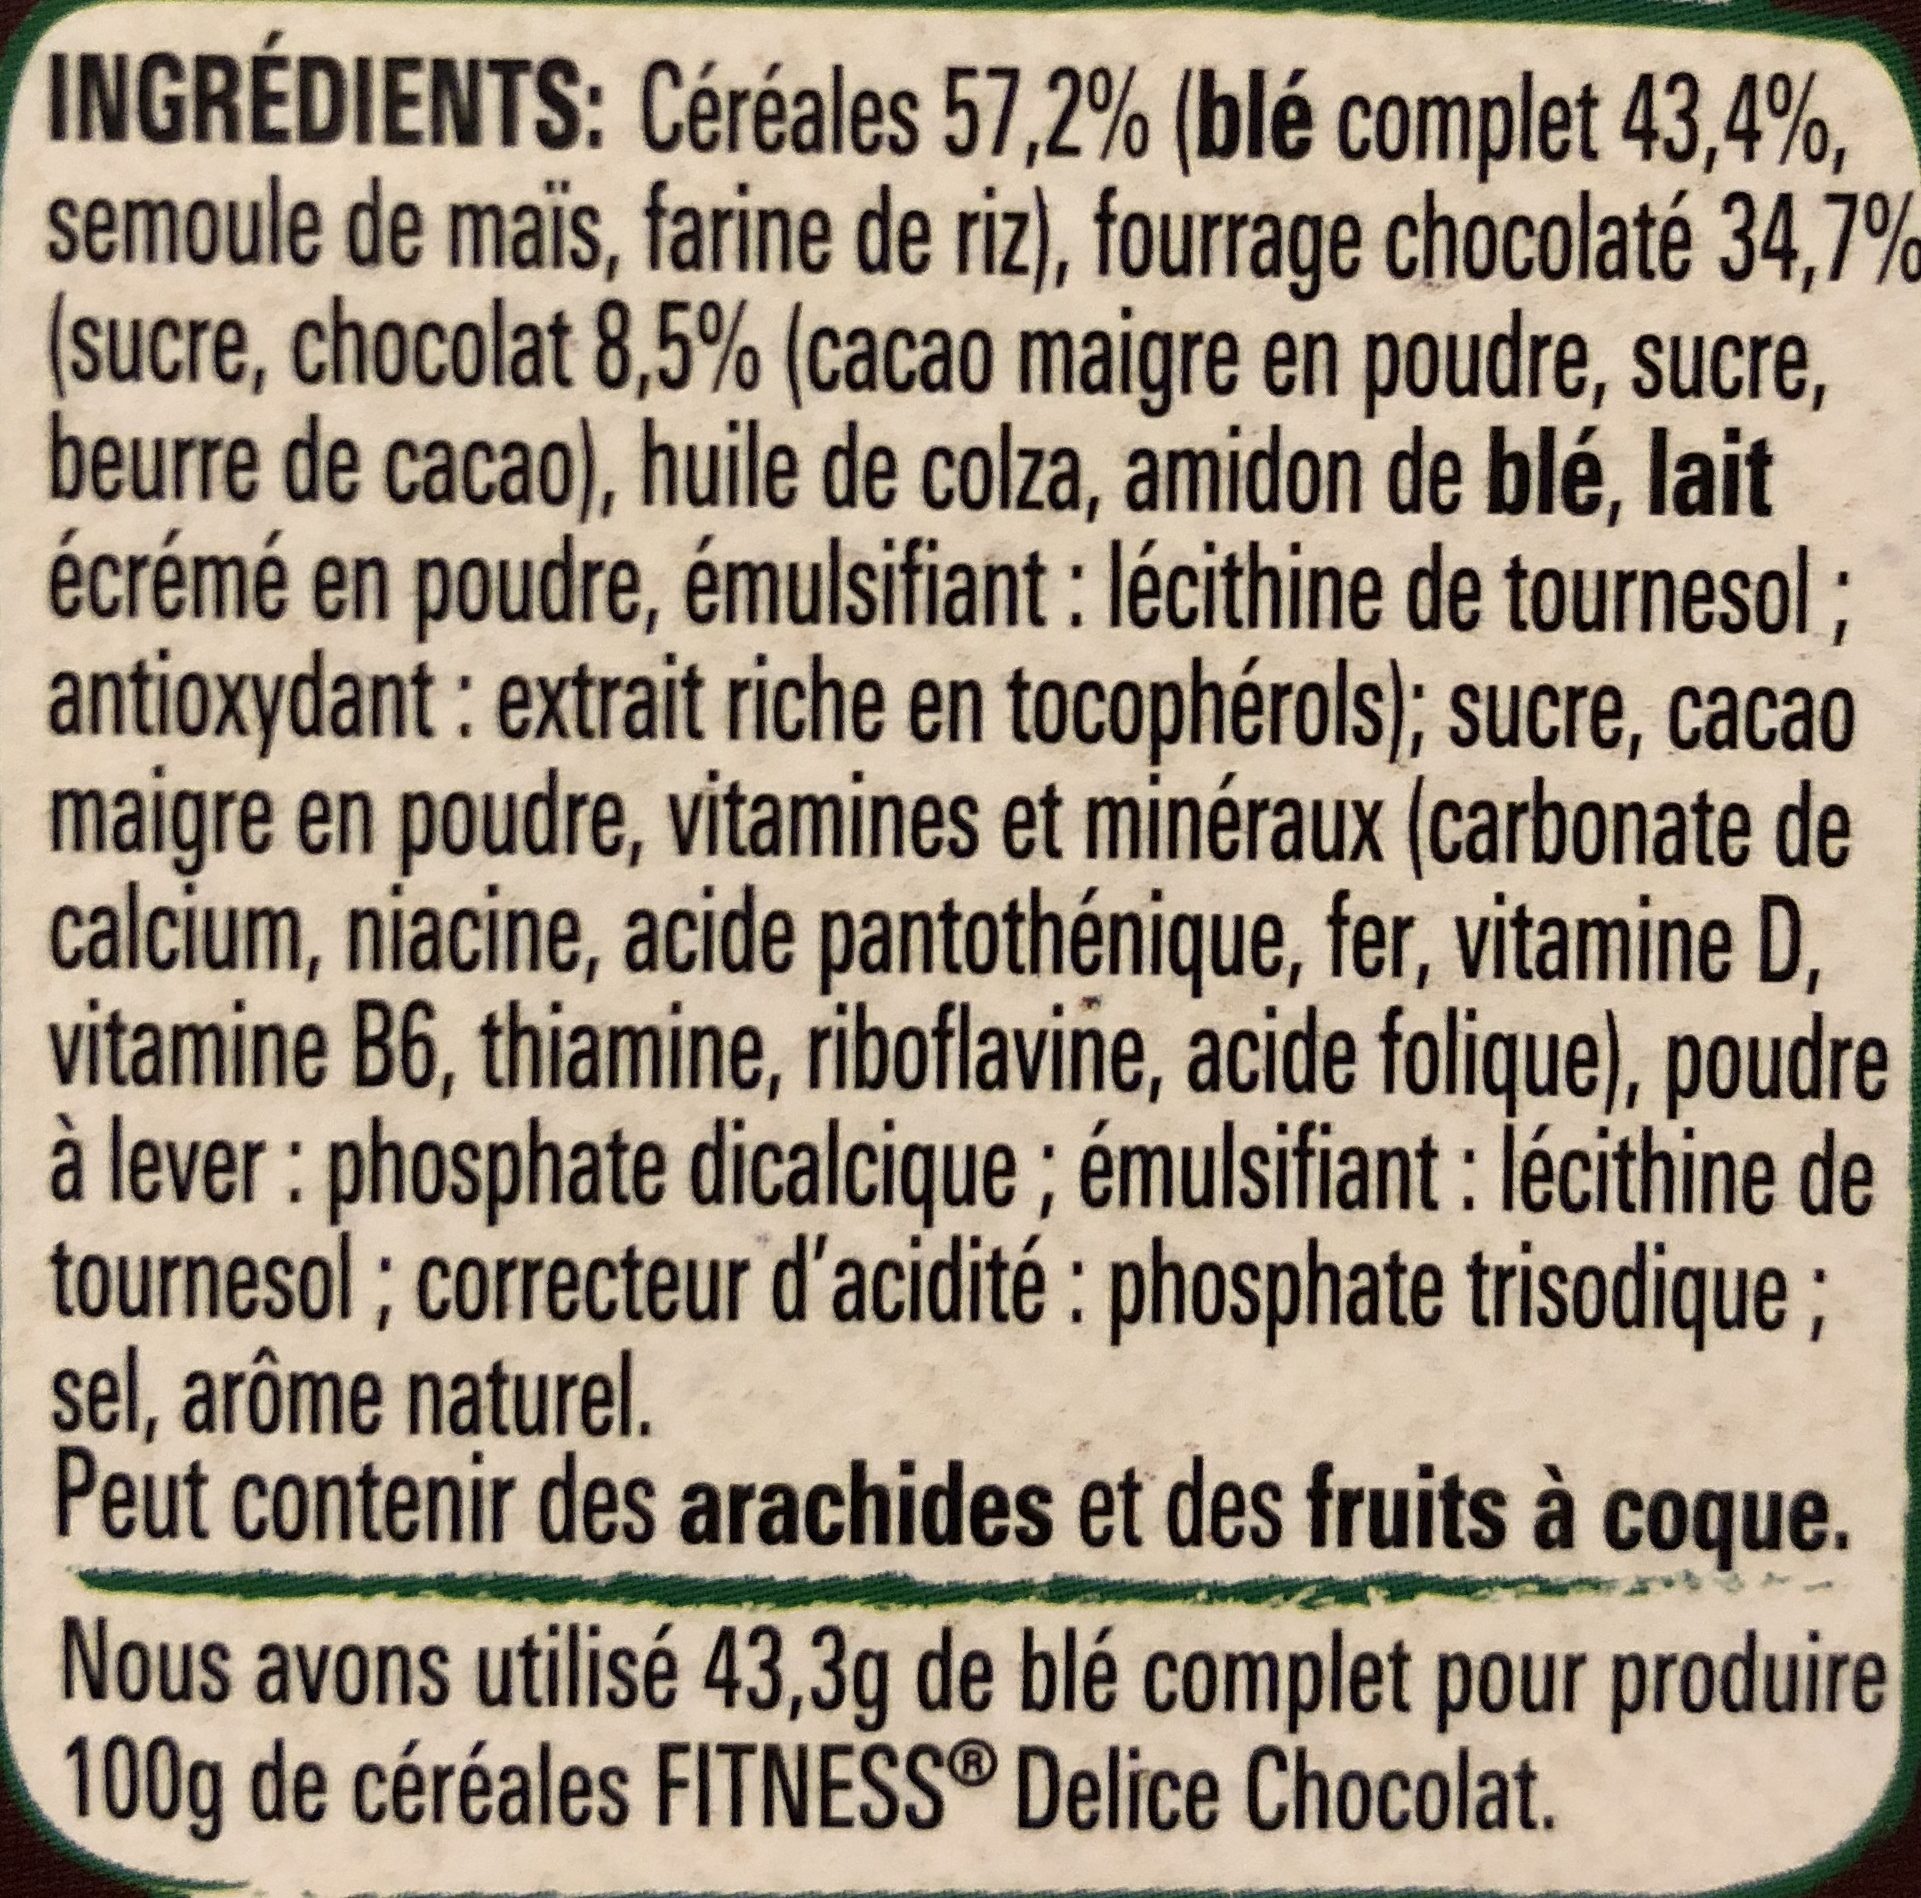 Fitness delice - Ingredients - fr